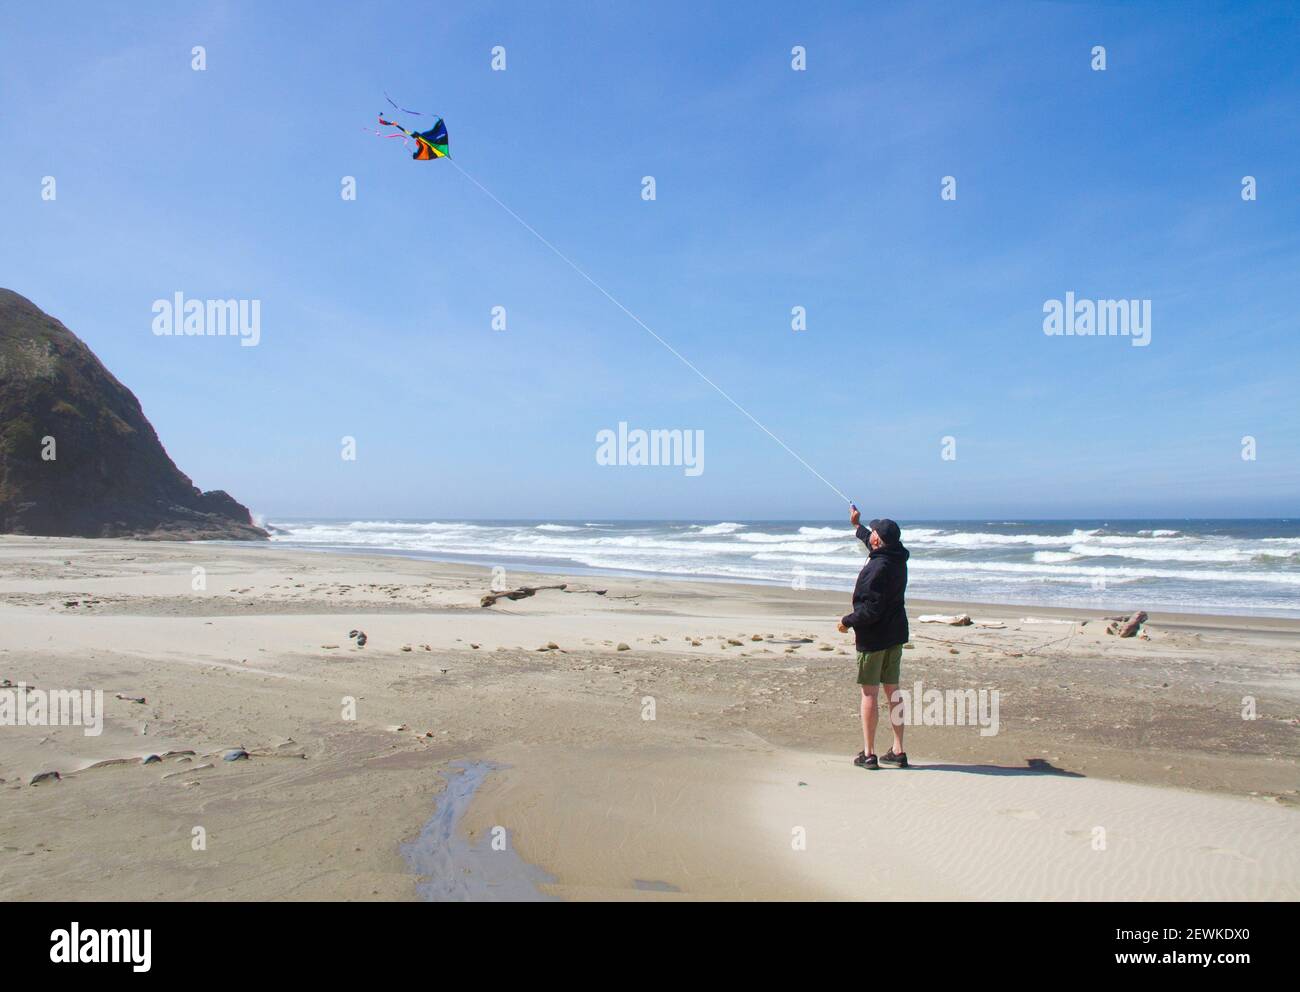 A man flies a kite on the beach near Yachats, Oregon, USA. Stock Photo